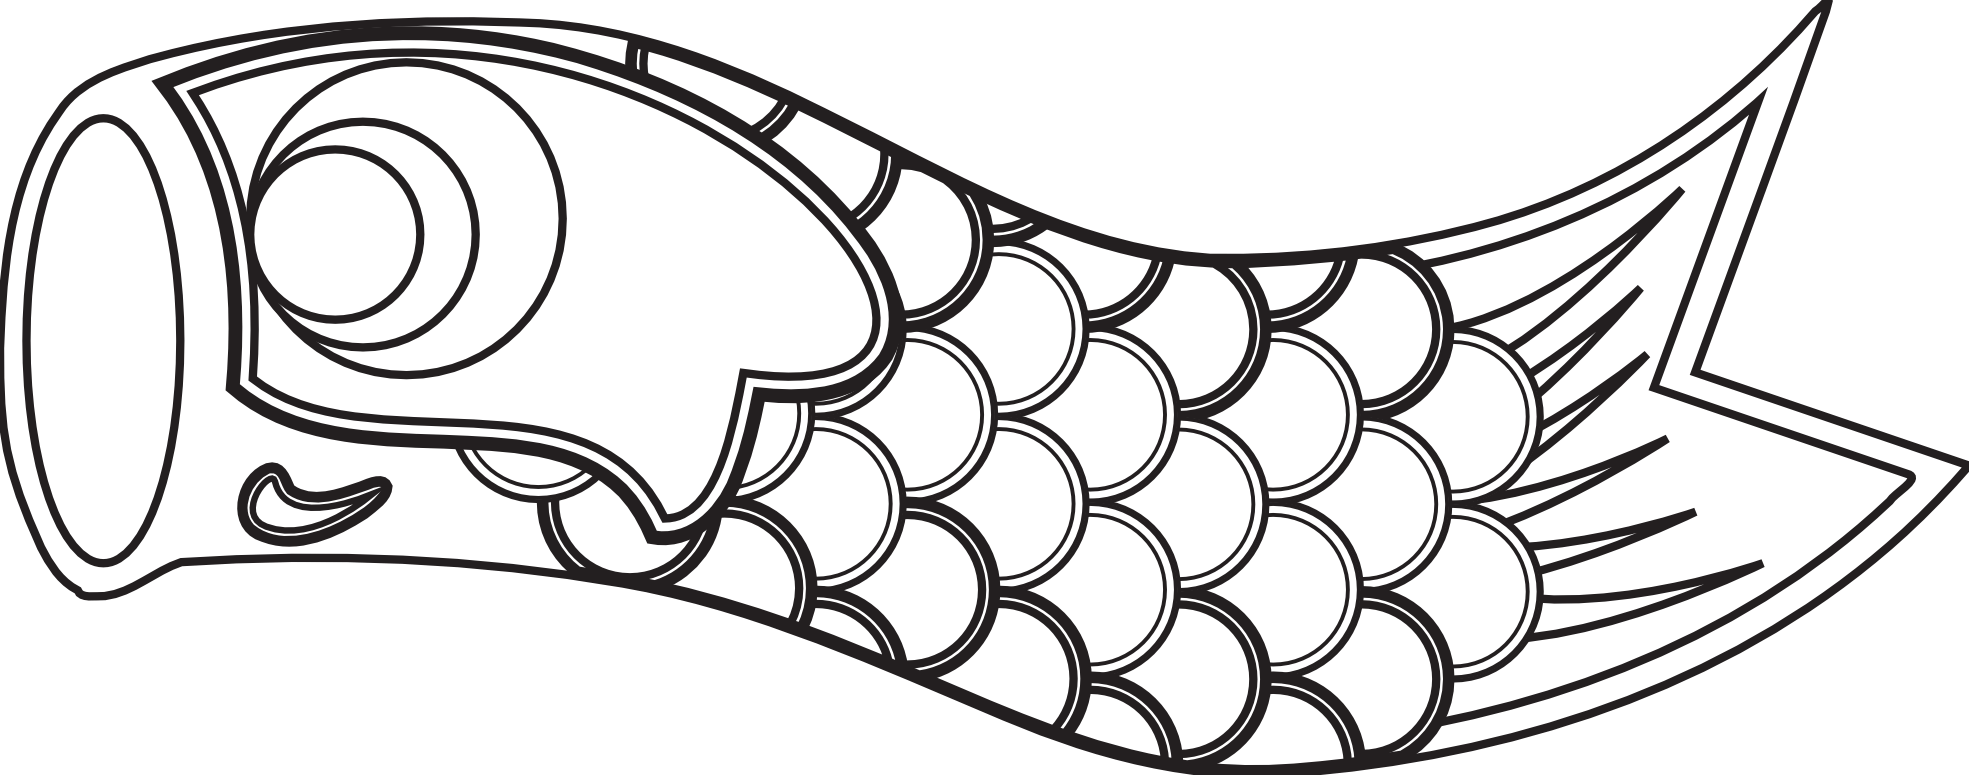 Wind Sock Fish Coloring Page - Koinobori Black And White (1969x775)